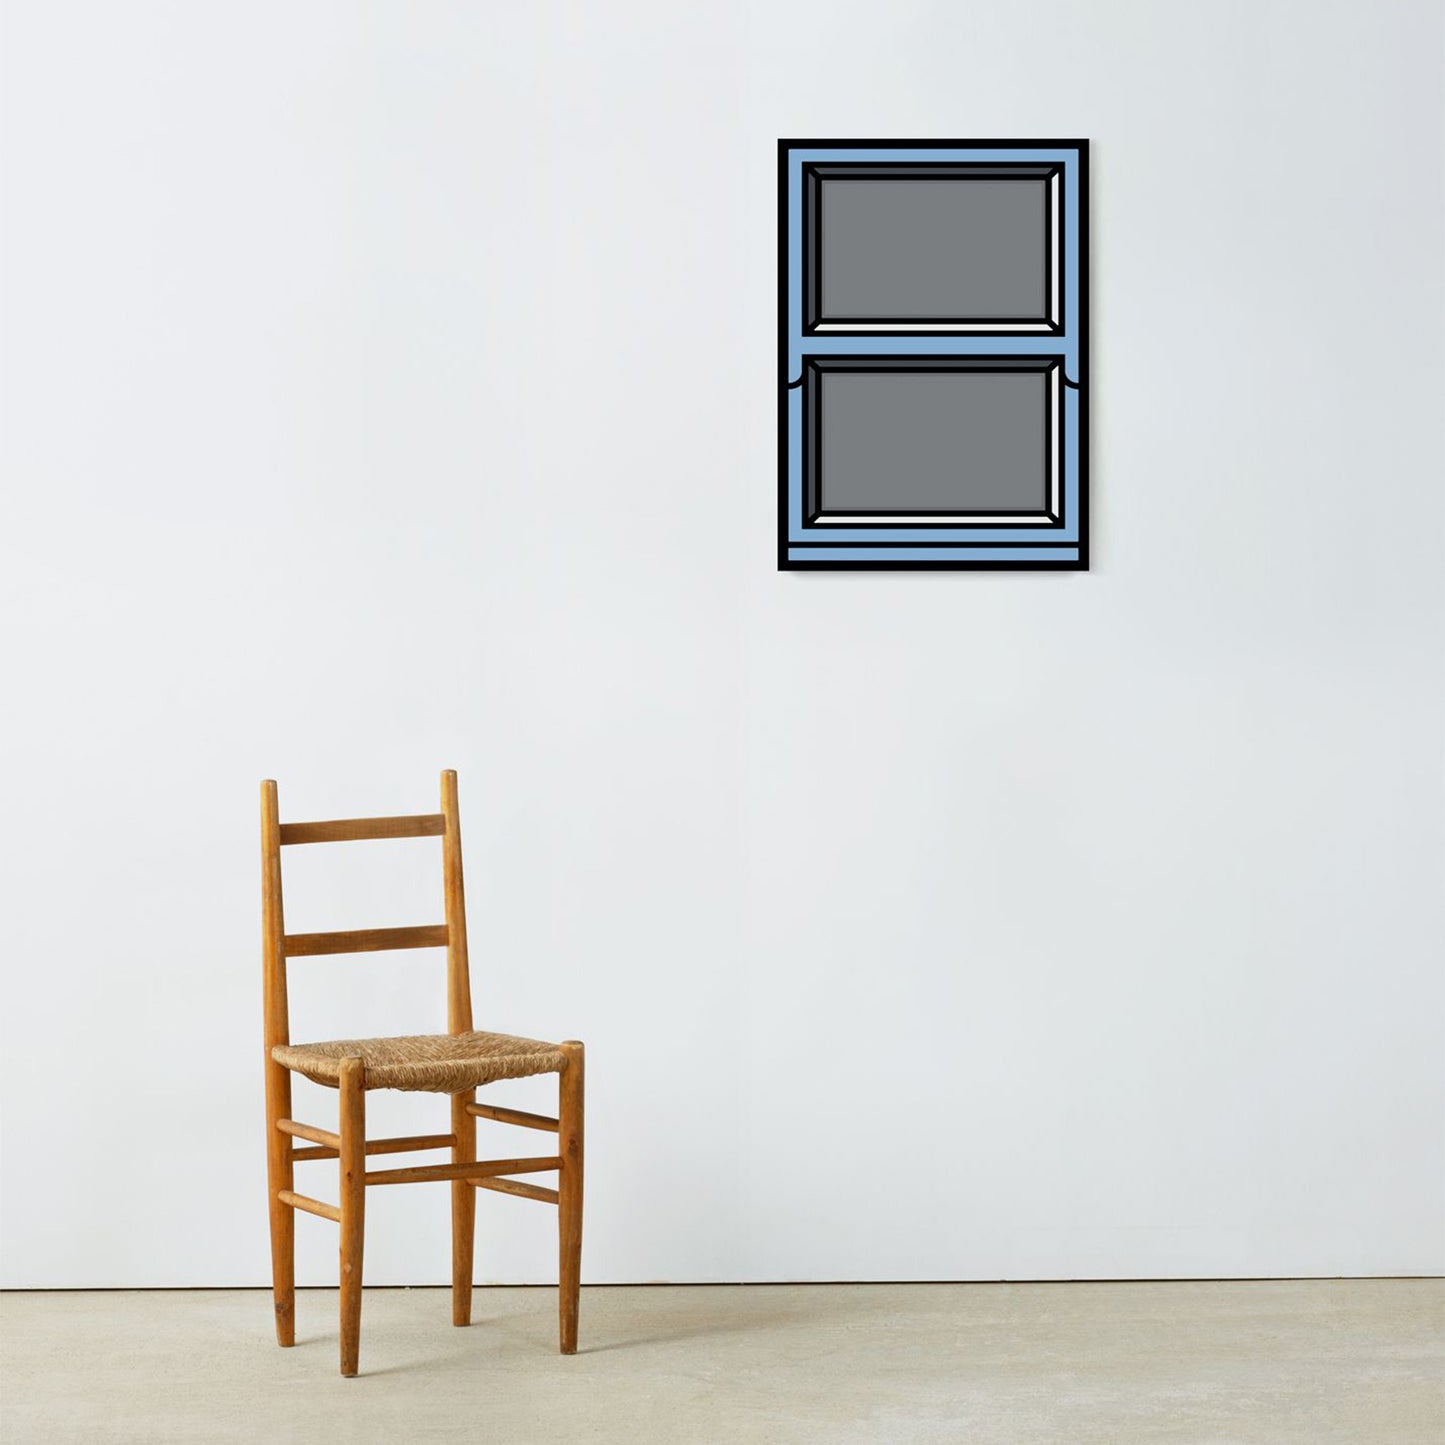 The Wrong Shop Window 3 – Richard Woods, 50x70cm